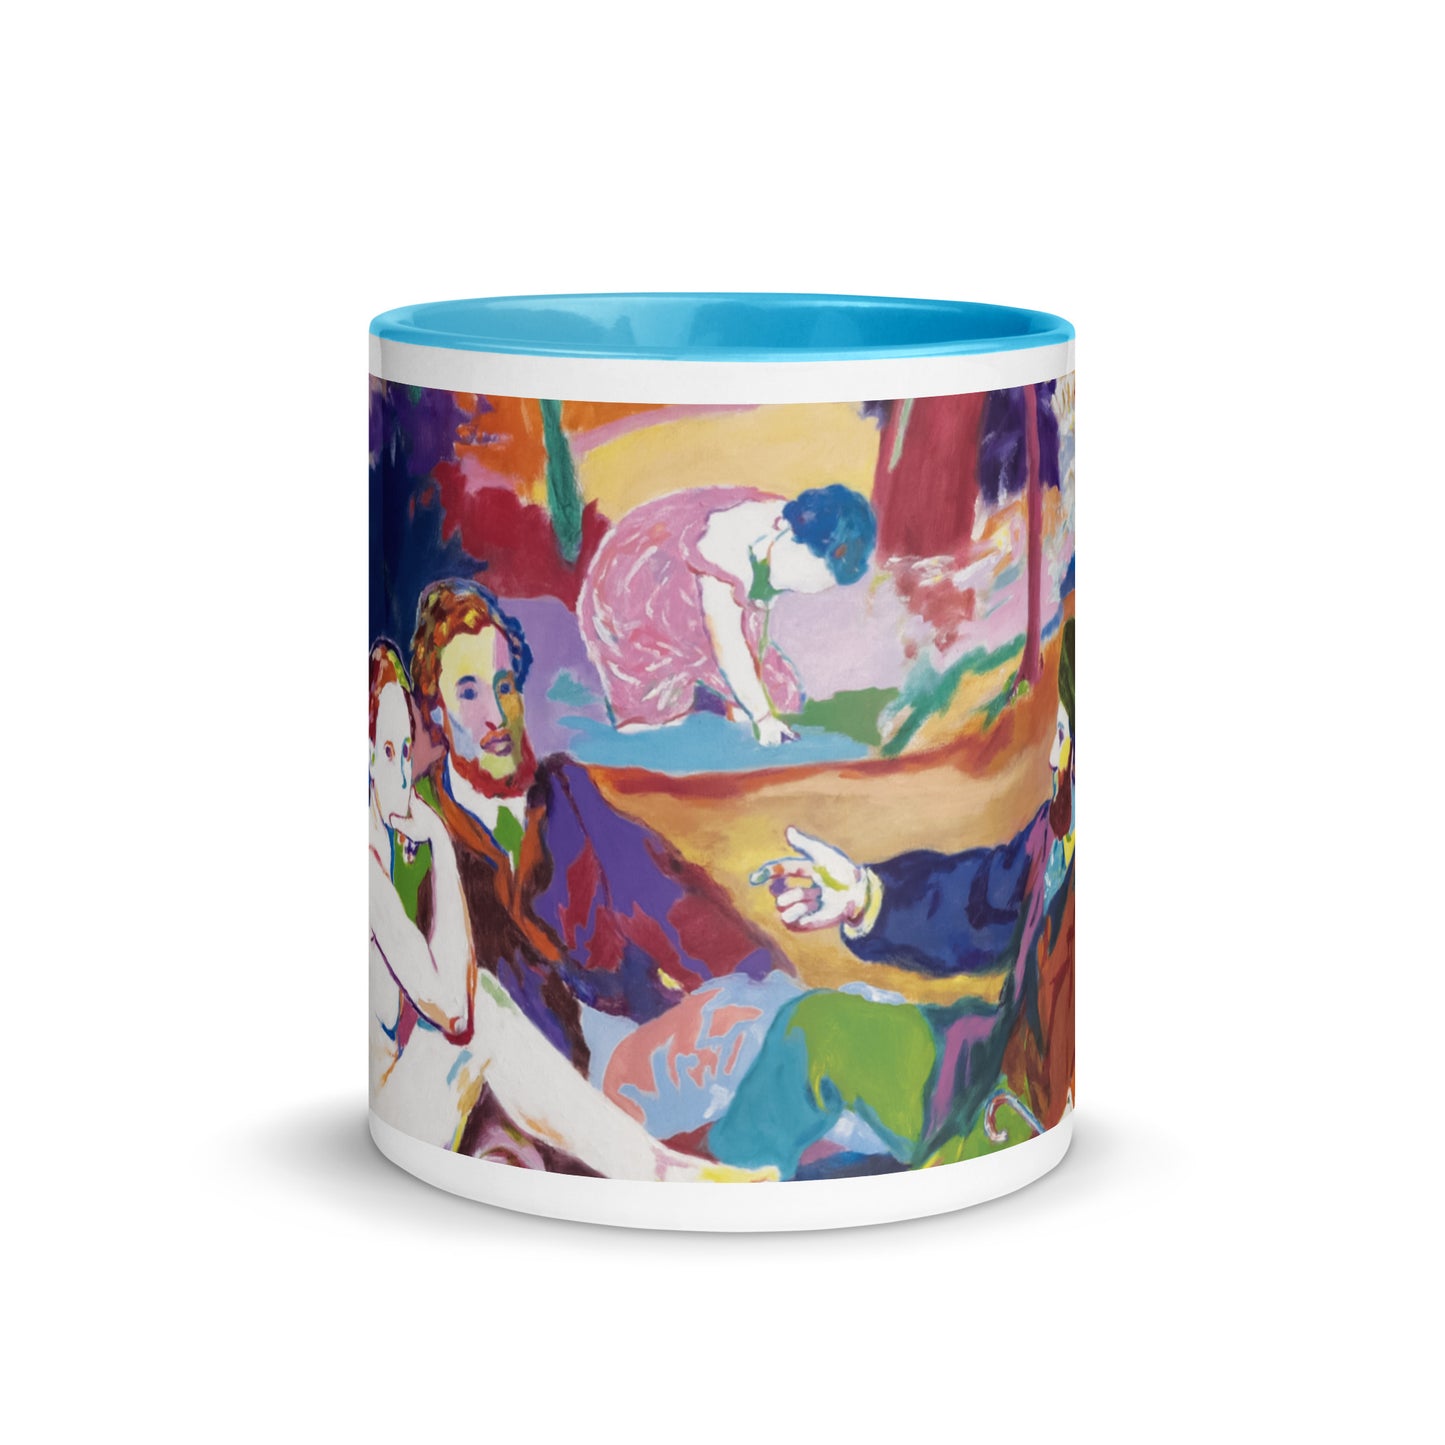 Forest Bathing Mug with Color Inside